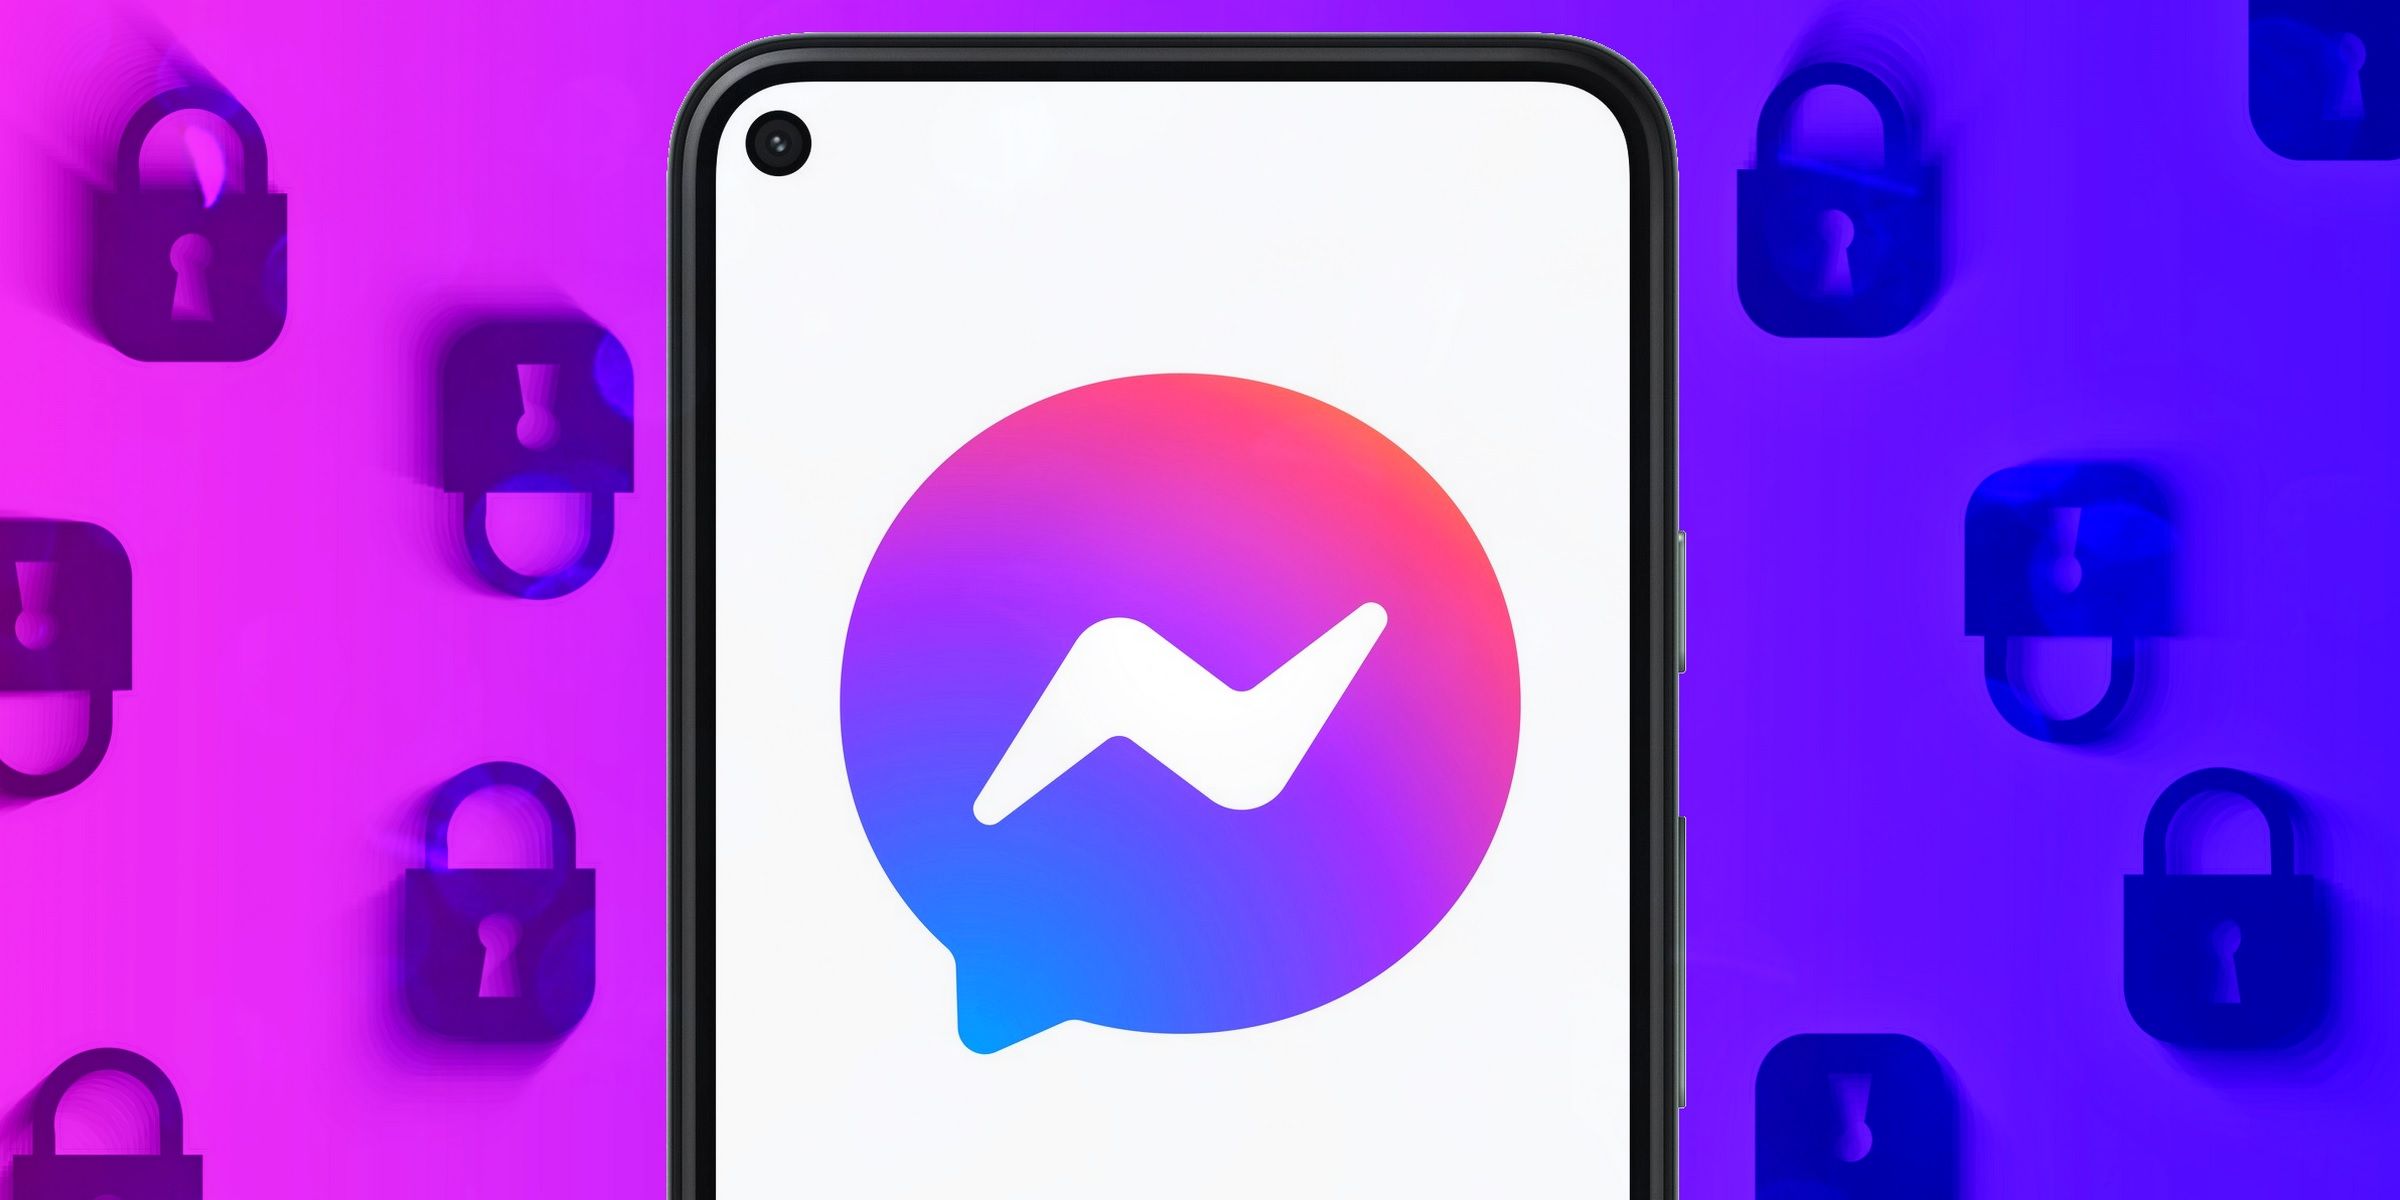 Facebook messenger logo on a smartphone screen